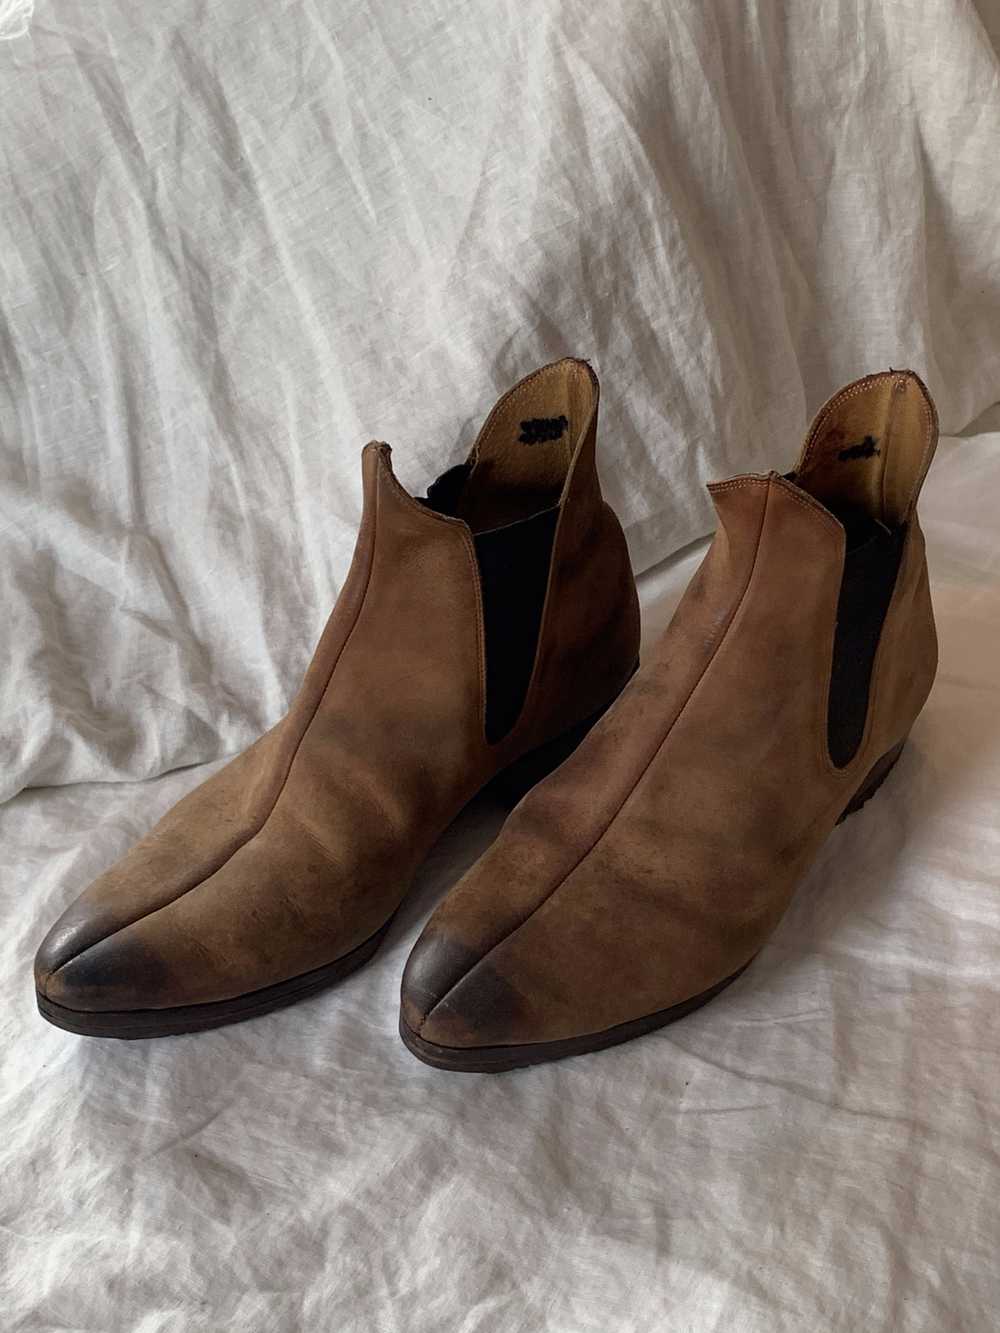 Vintage Brown Vintage Chelsea Boots - image 1